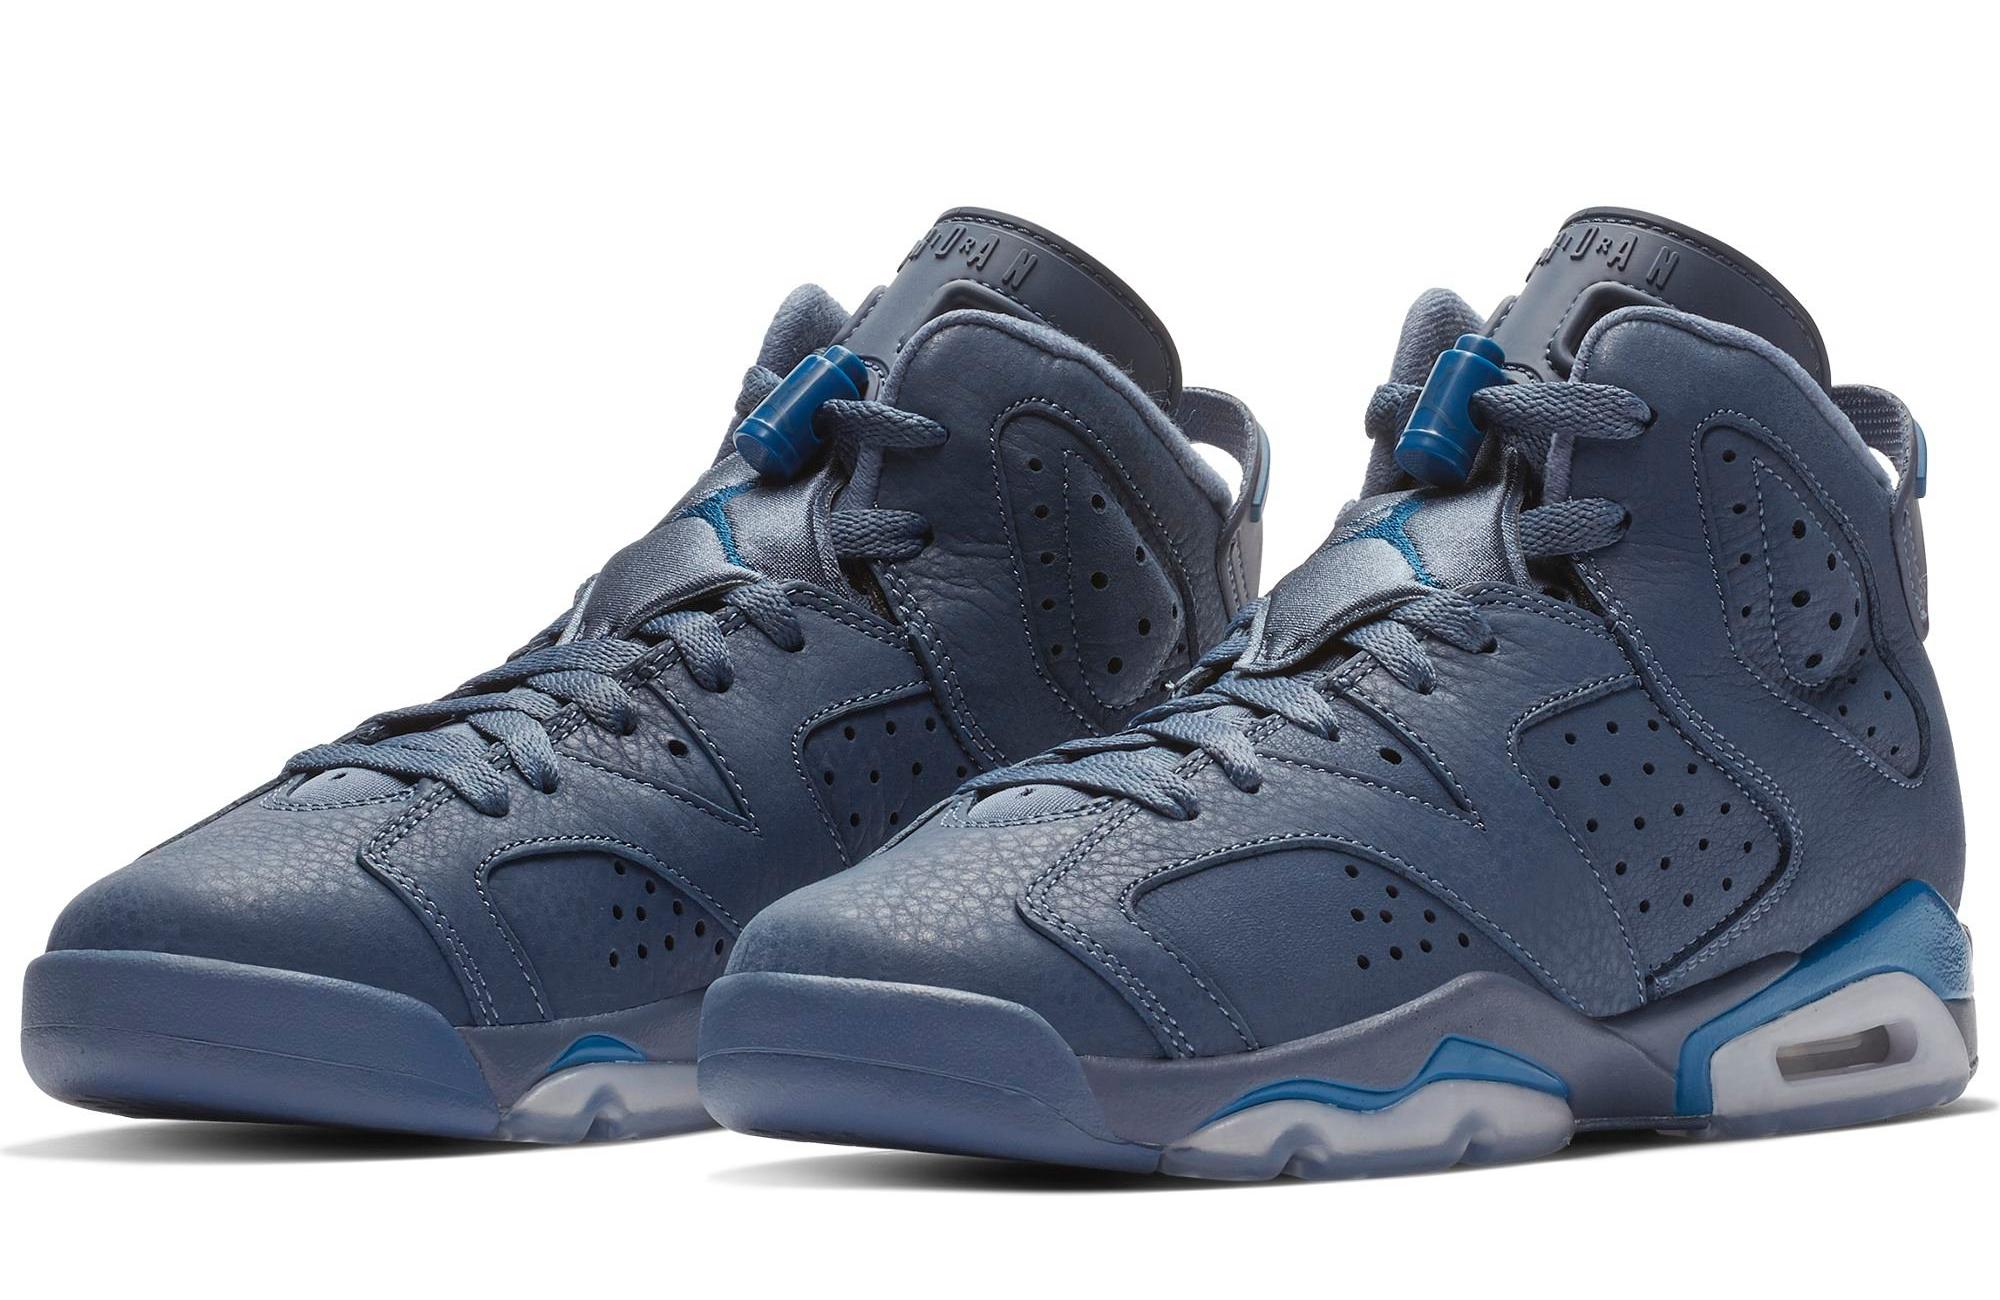 Sneakers Release- Jordan Retro 6 “Diffused Blue” Basketball Shoe